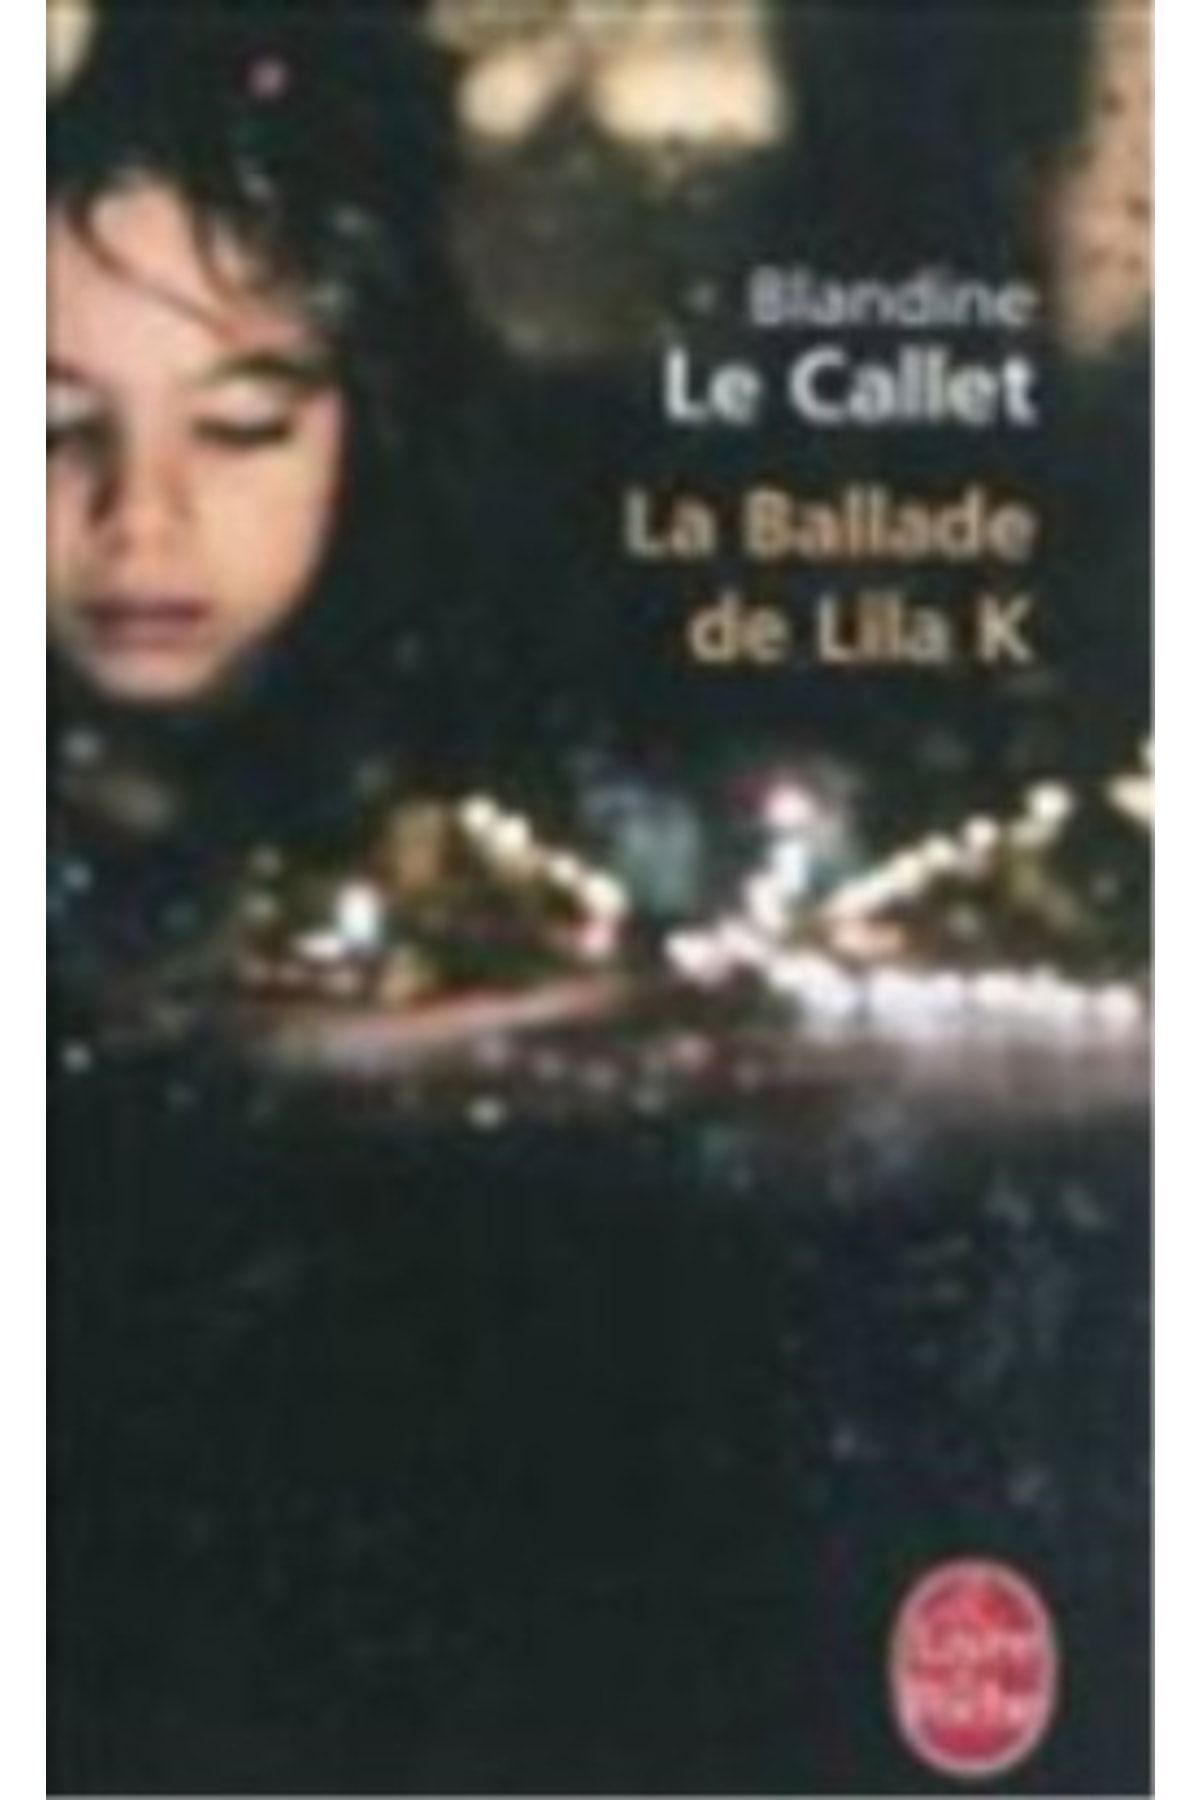 Le Livre de Poche La Ballade De Lila K